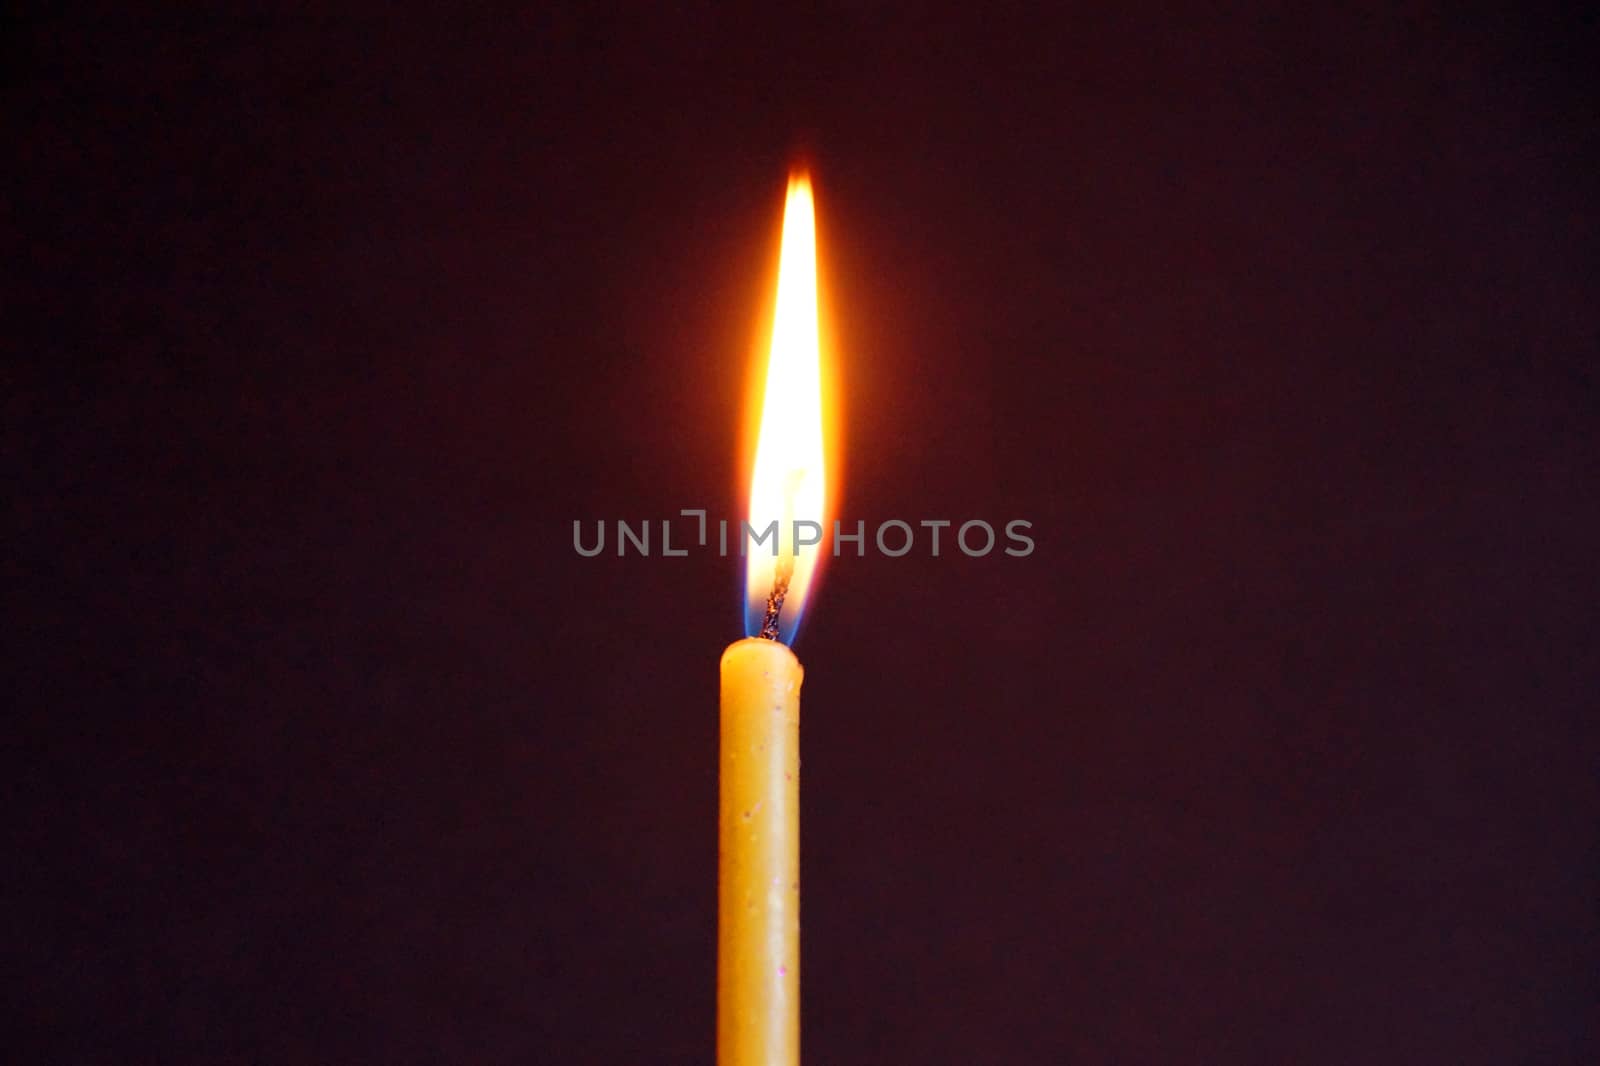 burning wax candle close-up on dark background